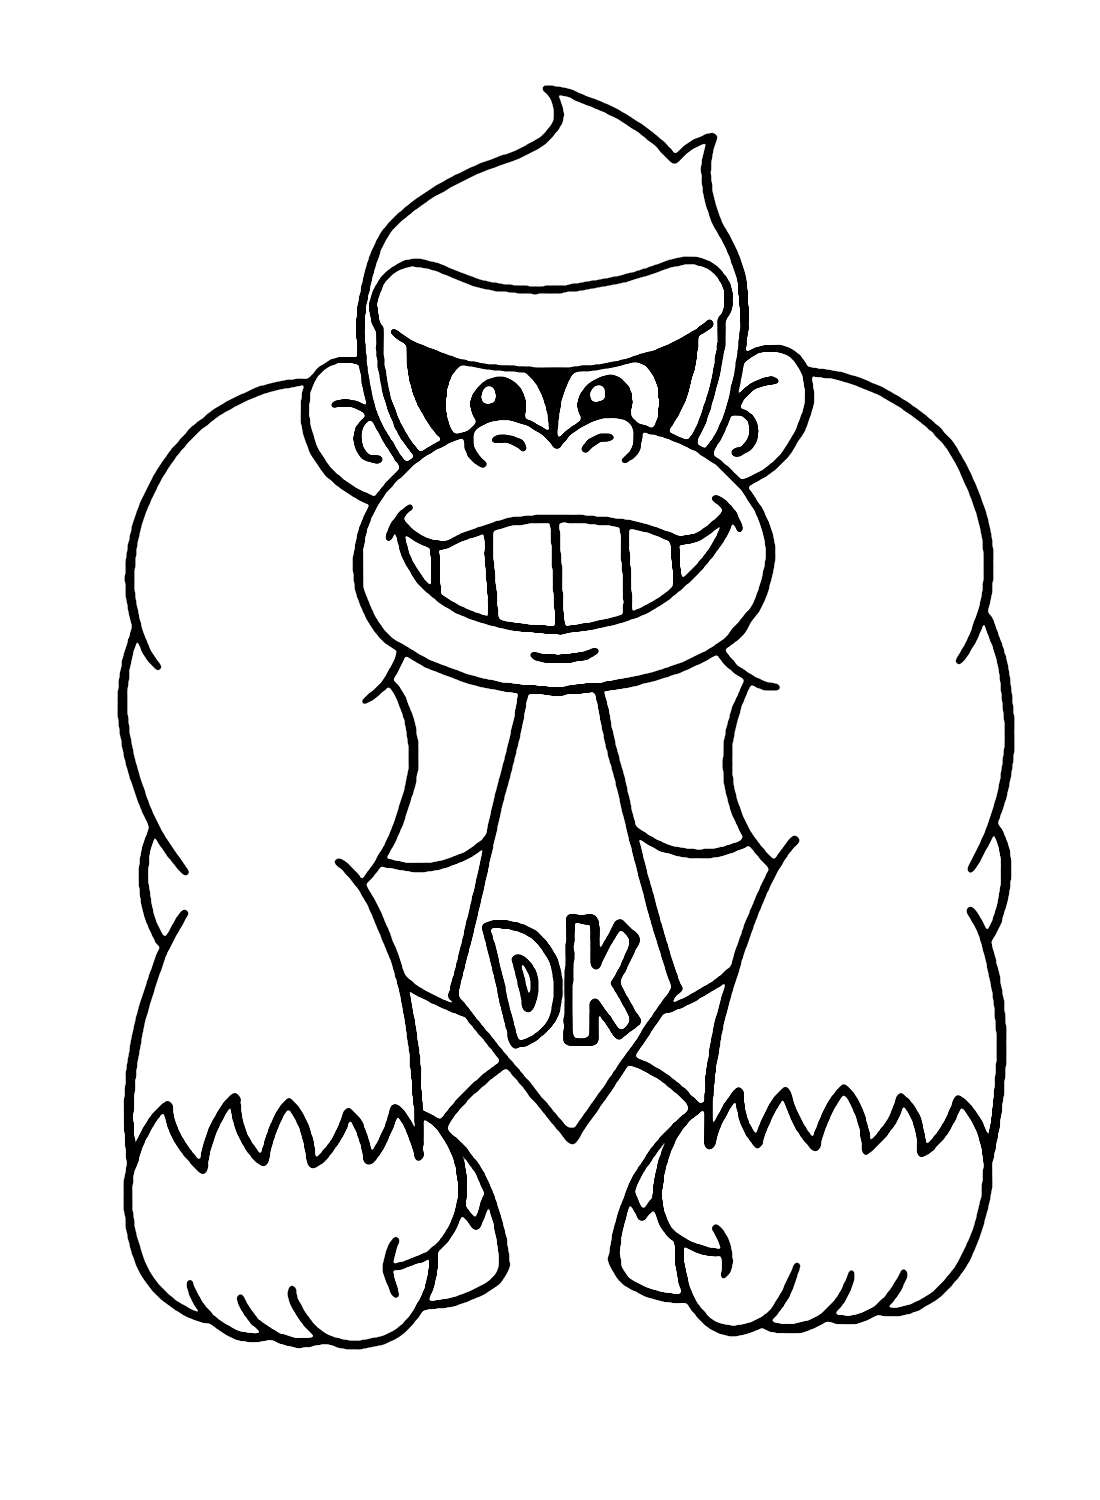 Donkey Kong mignon de Donkey Kong